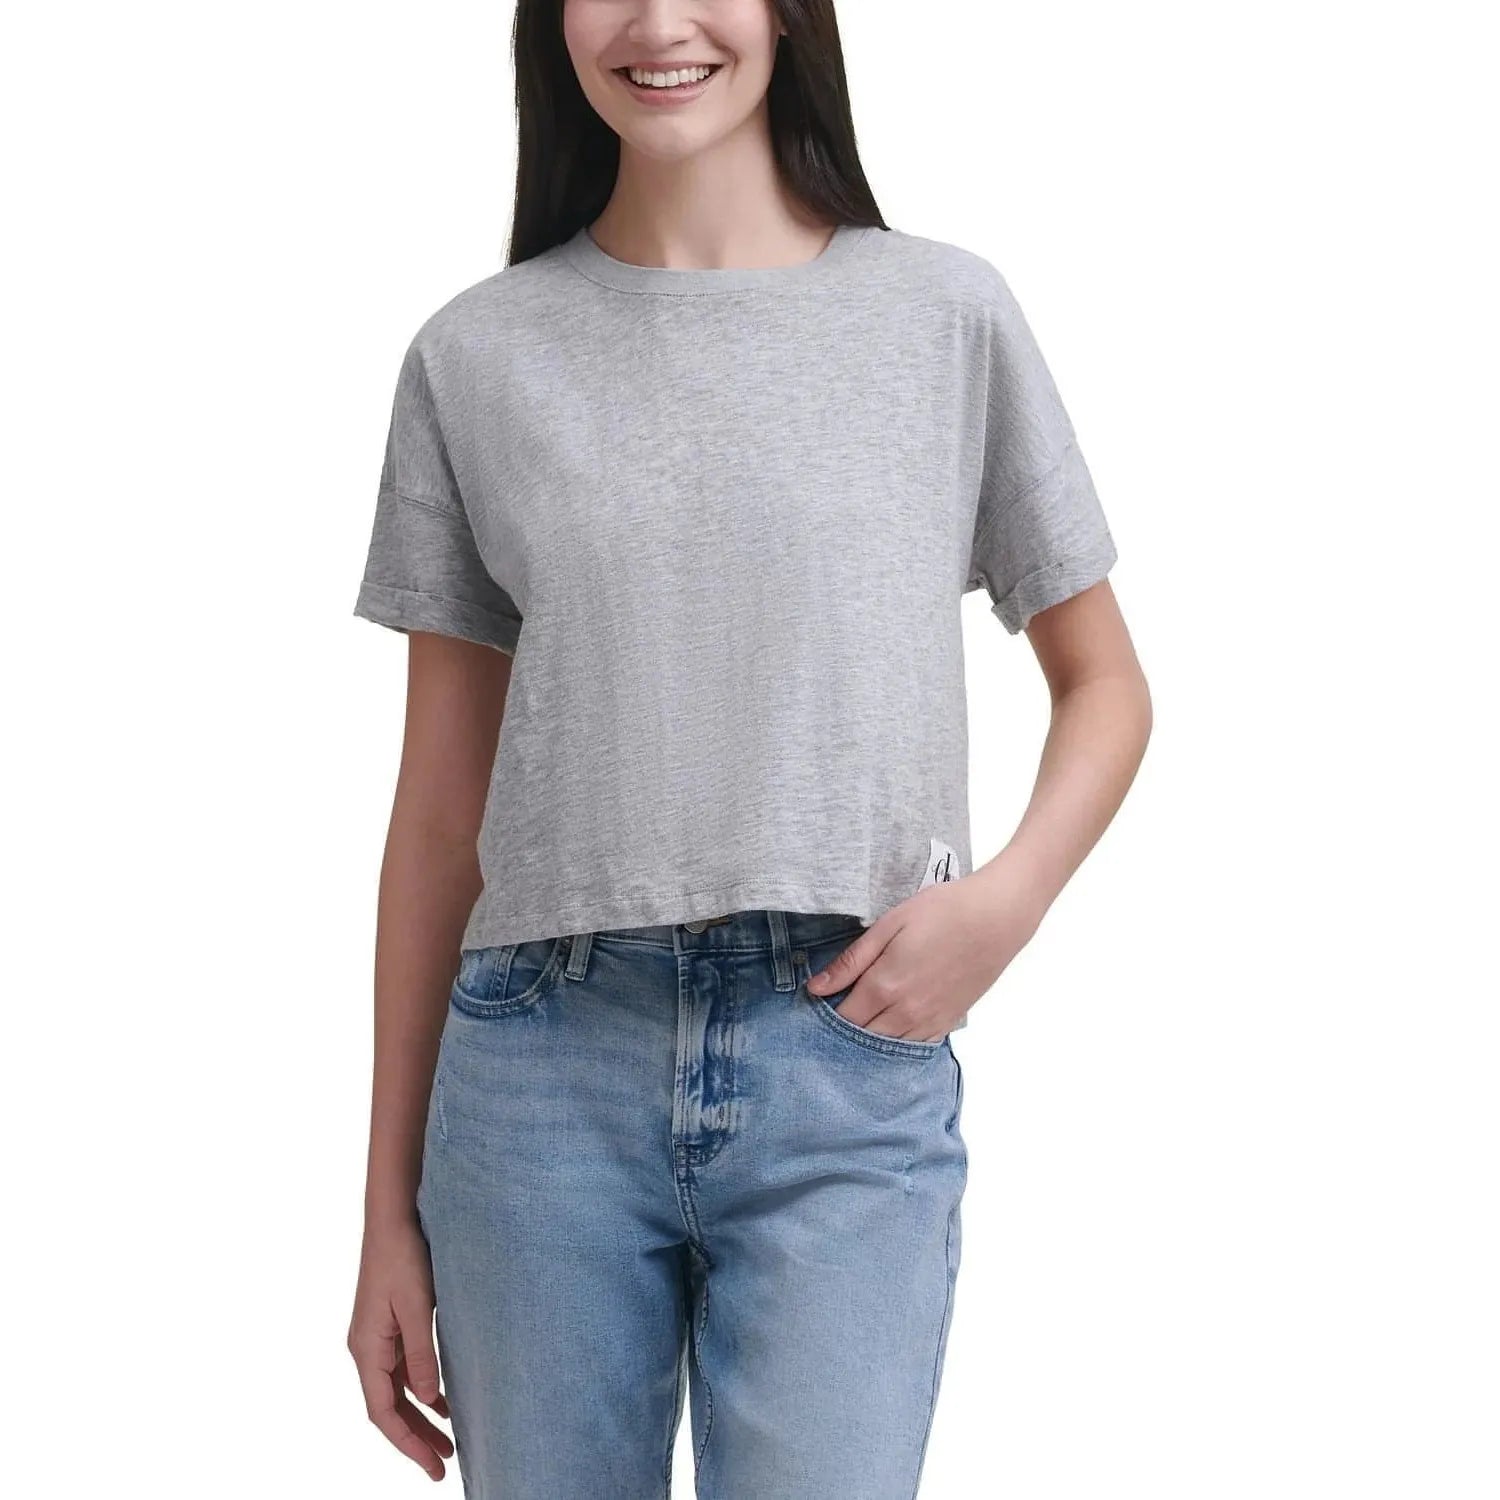 Calvin Klein-Calvin Klein Jeans Cropped Boxy-Fit Cotton T-Shirt -Pearl Heather Grey (Size Medium) - Brandat Outlet